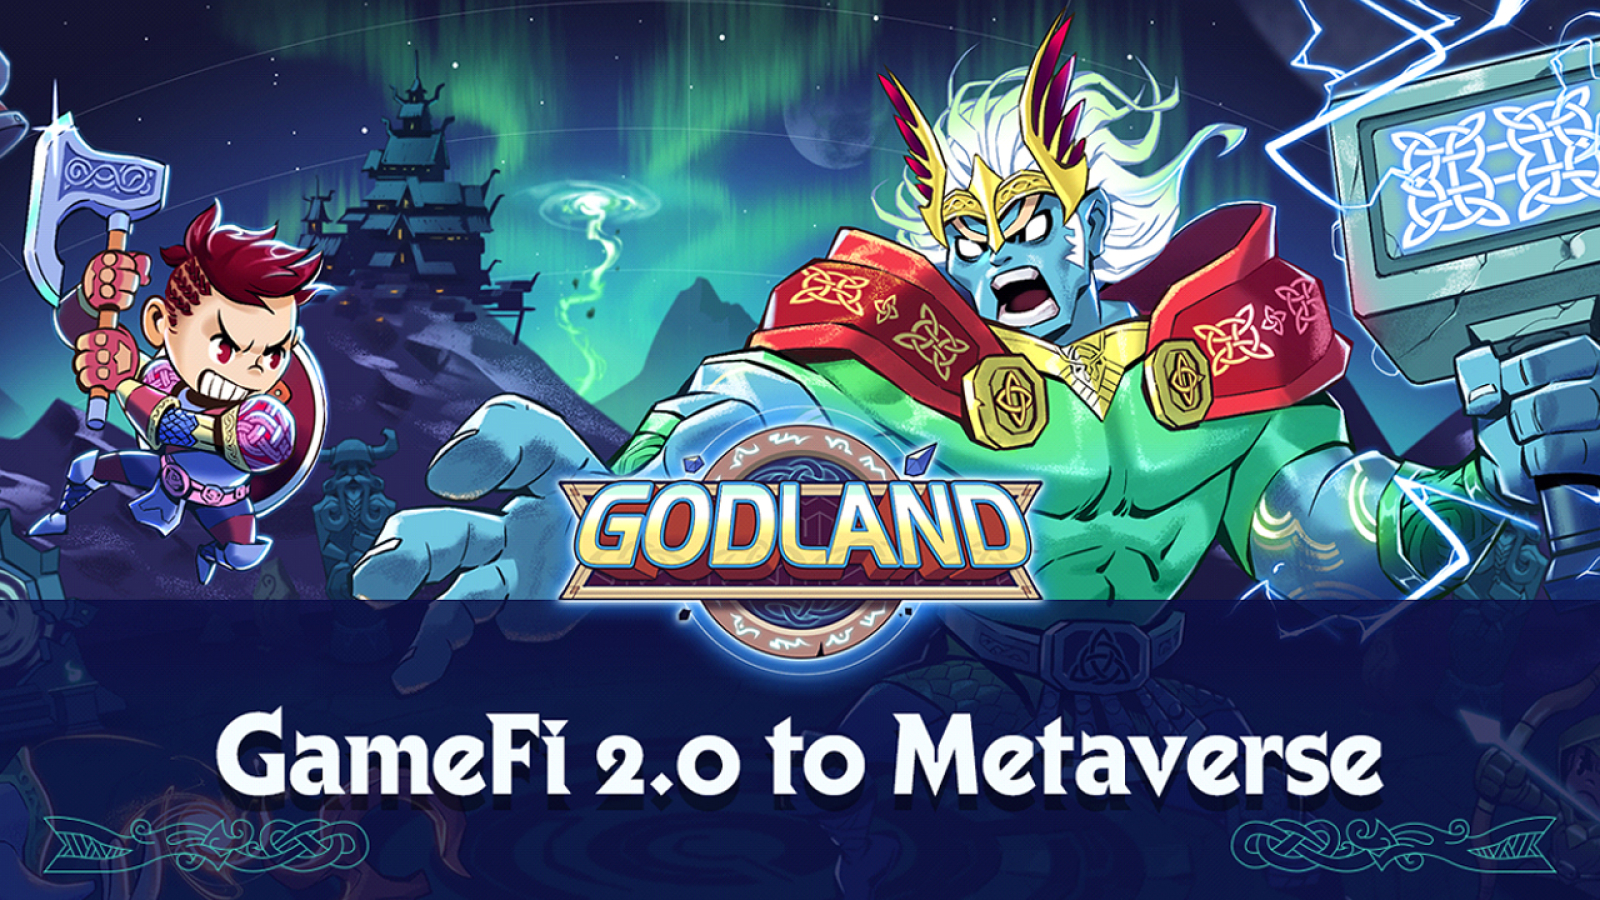 Godland: GameFi 2.0 to Metaverse